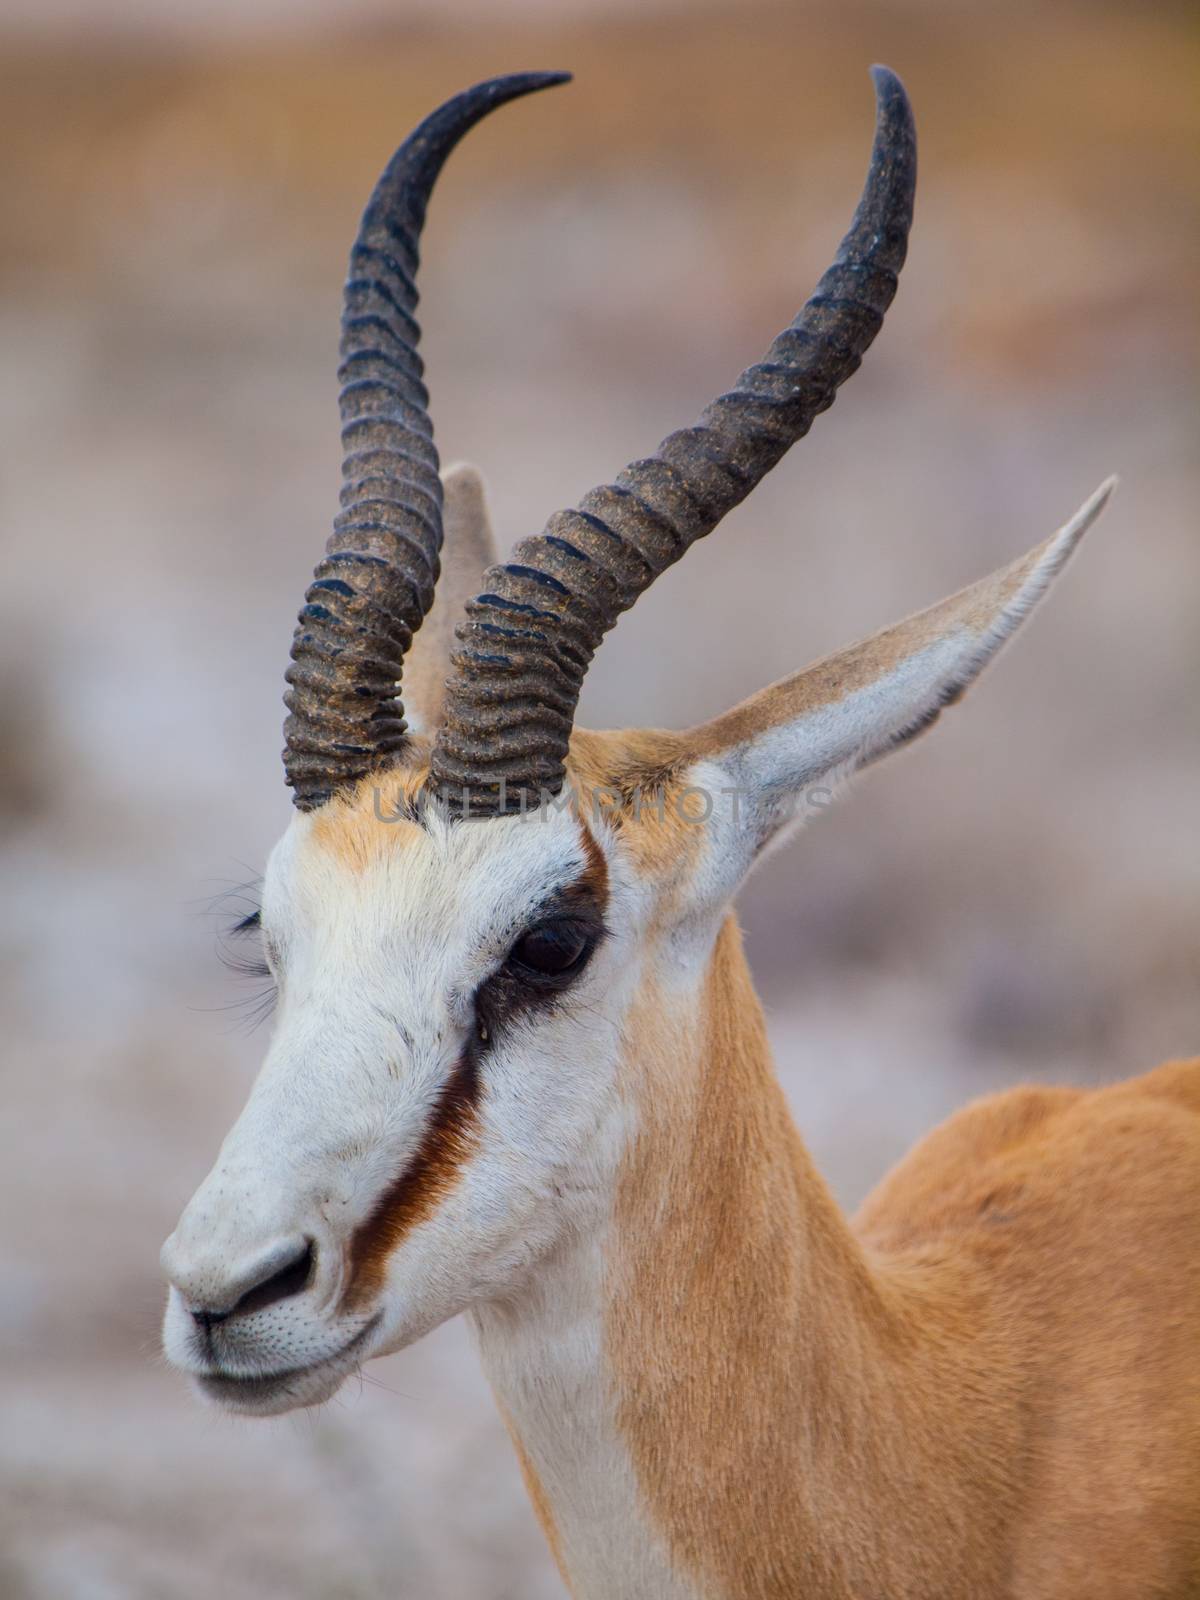 Springbok antelope by pyty